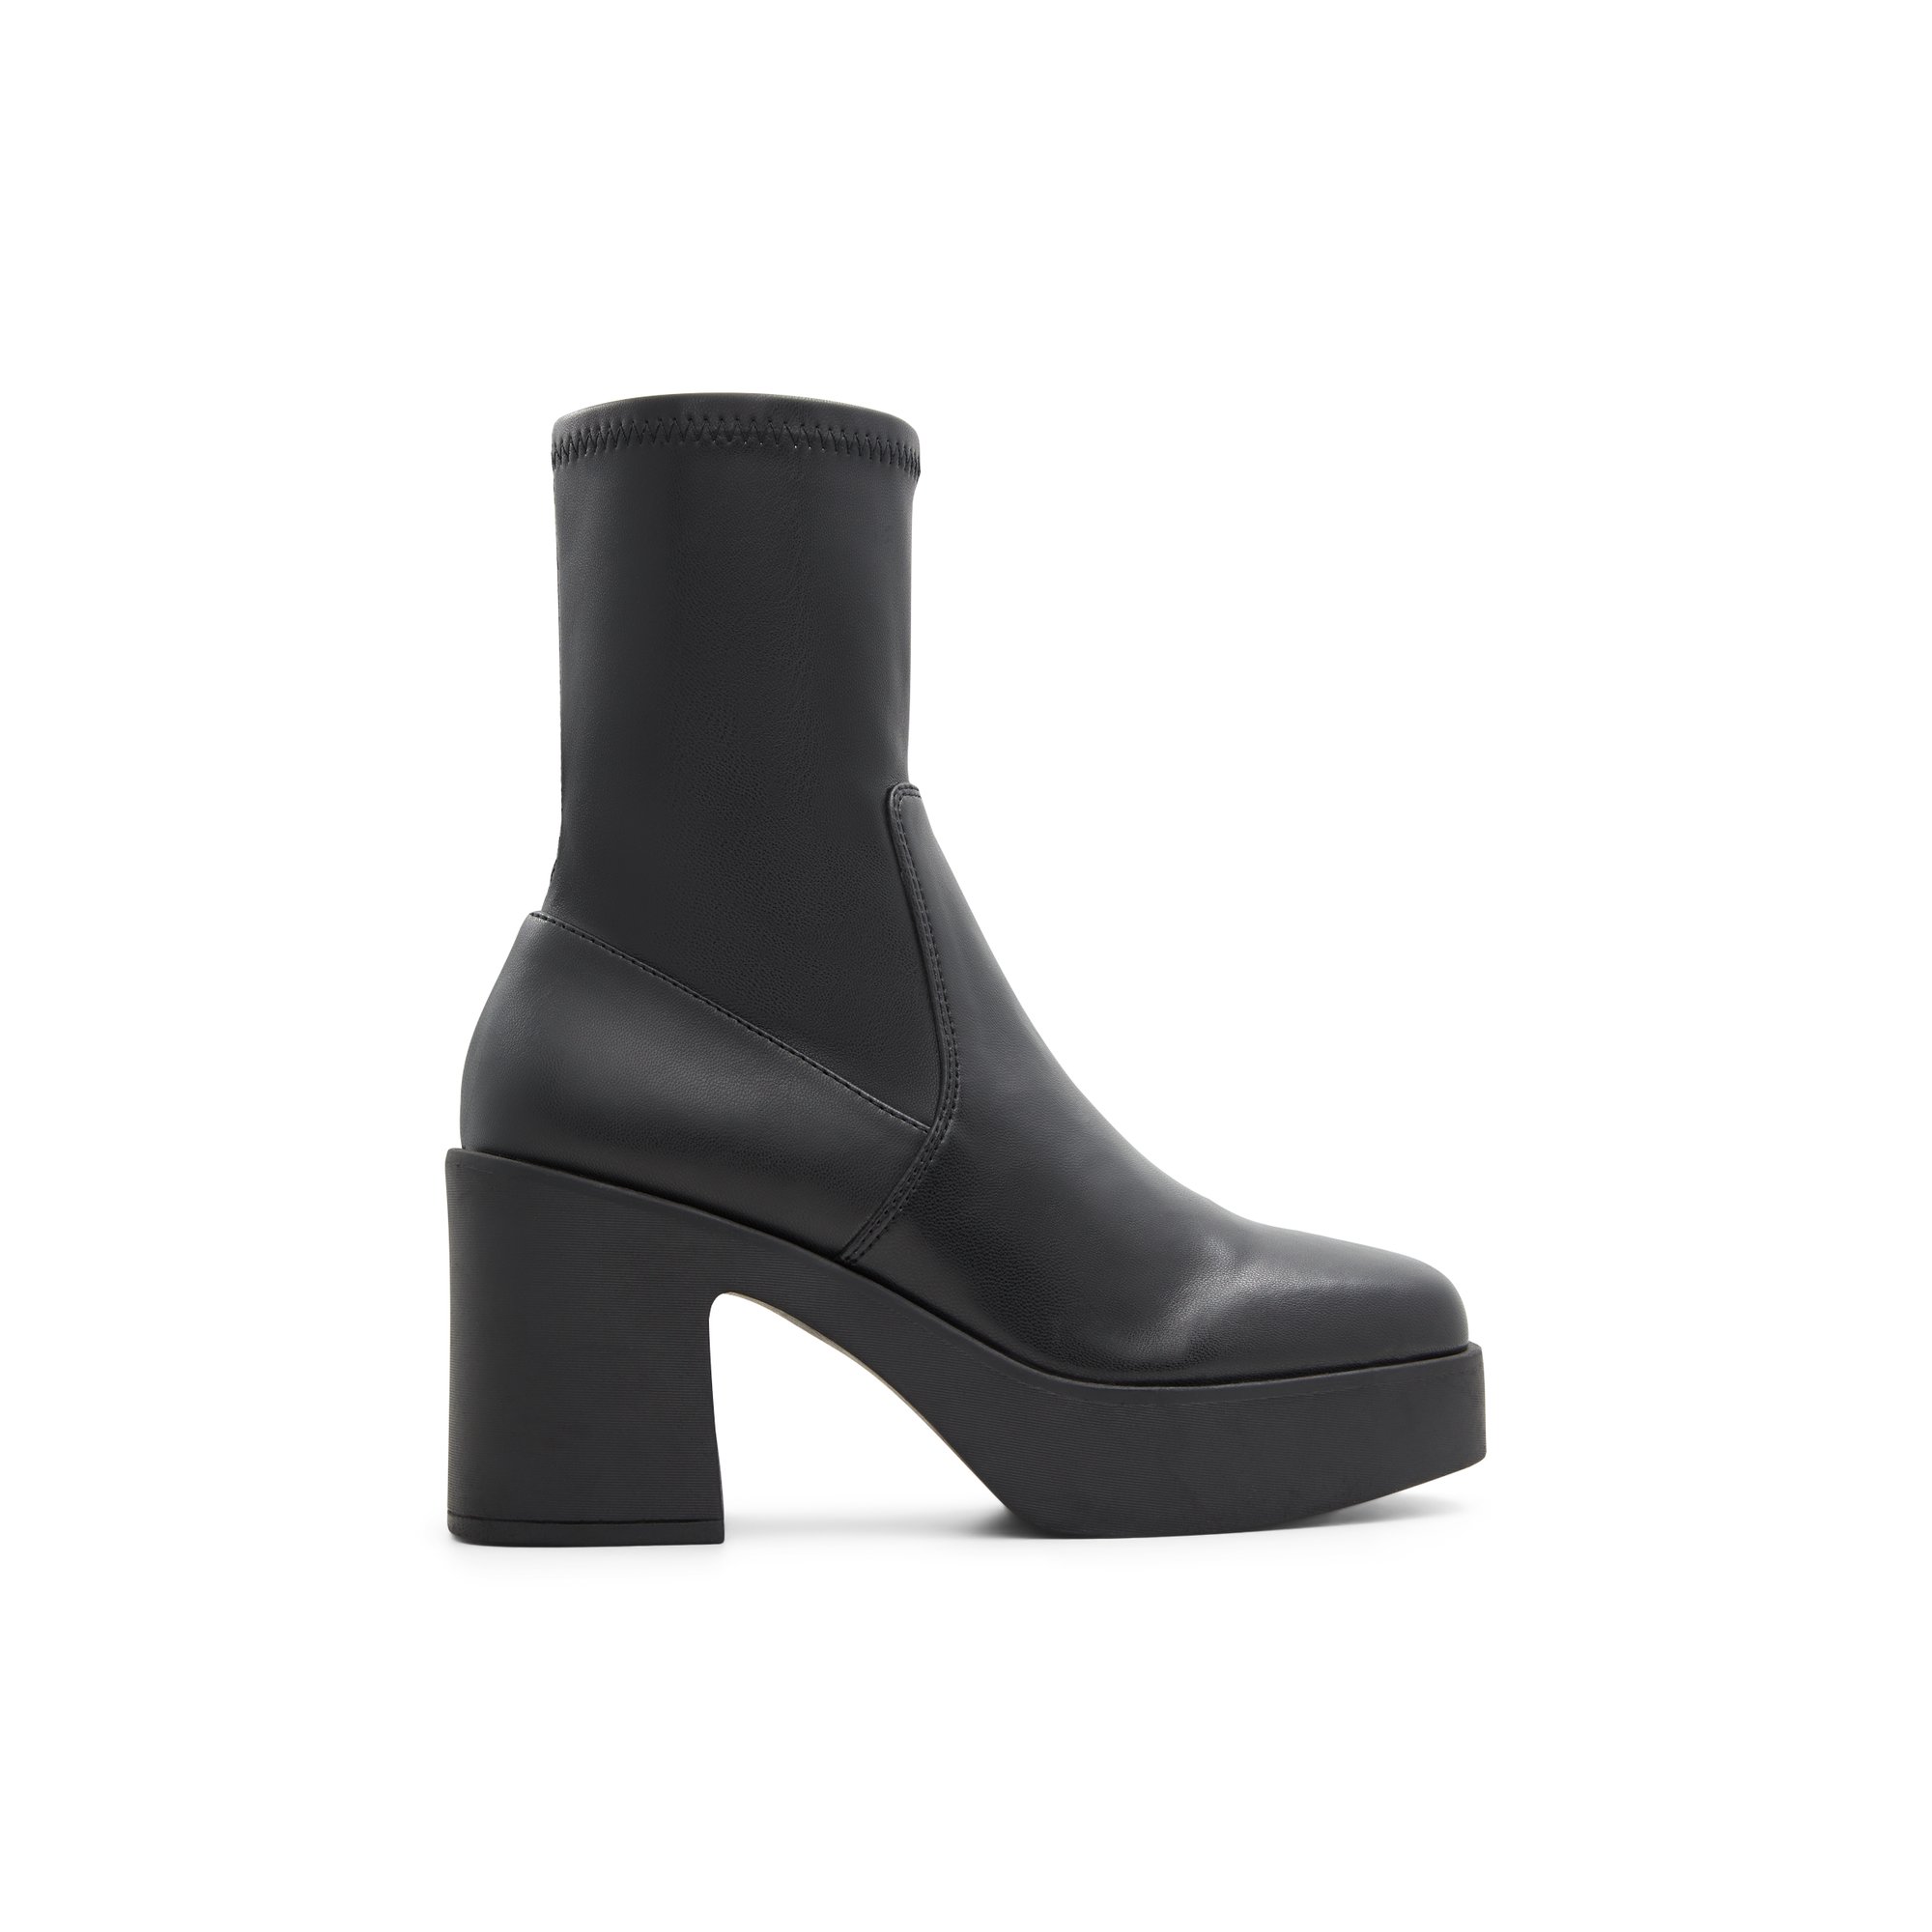 ALDO Upstep - Women's Ankle Boot - Black